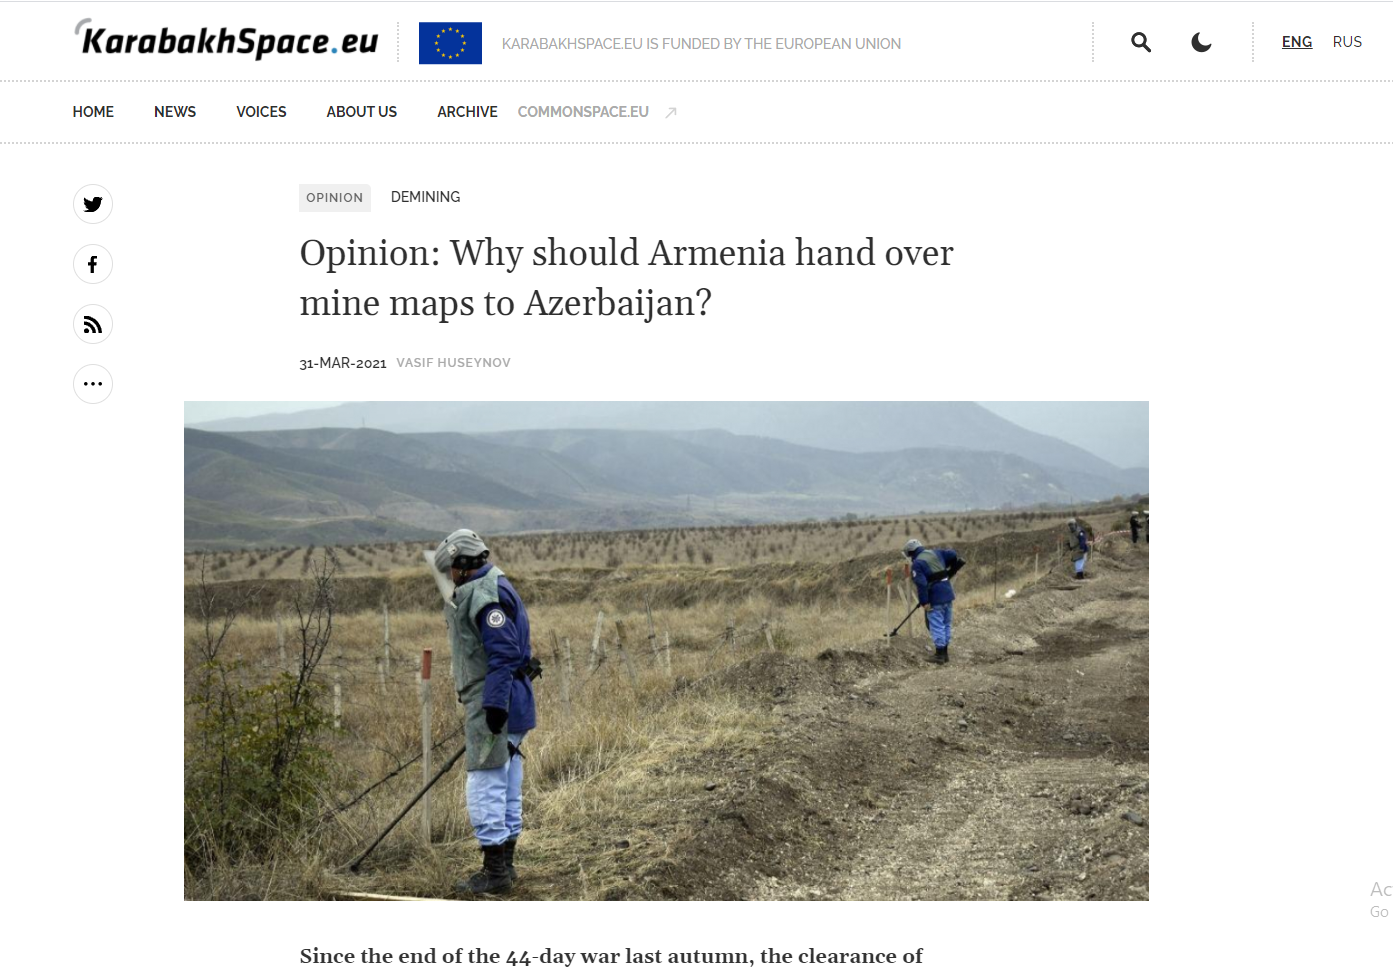 Opinion: Why should Armenia hand over mine maps to Azerbaijan?